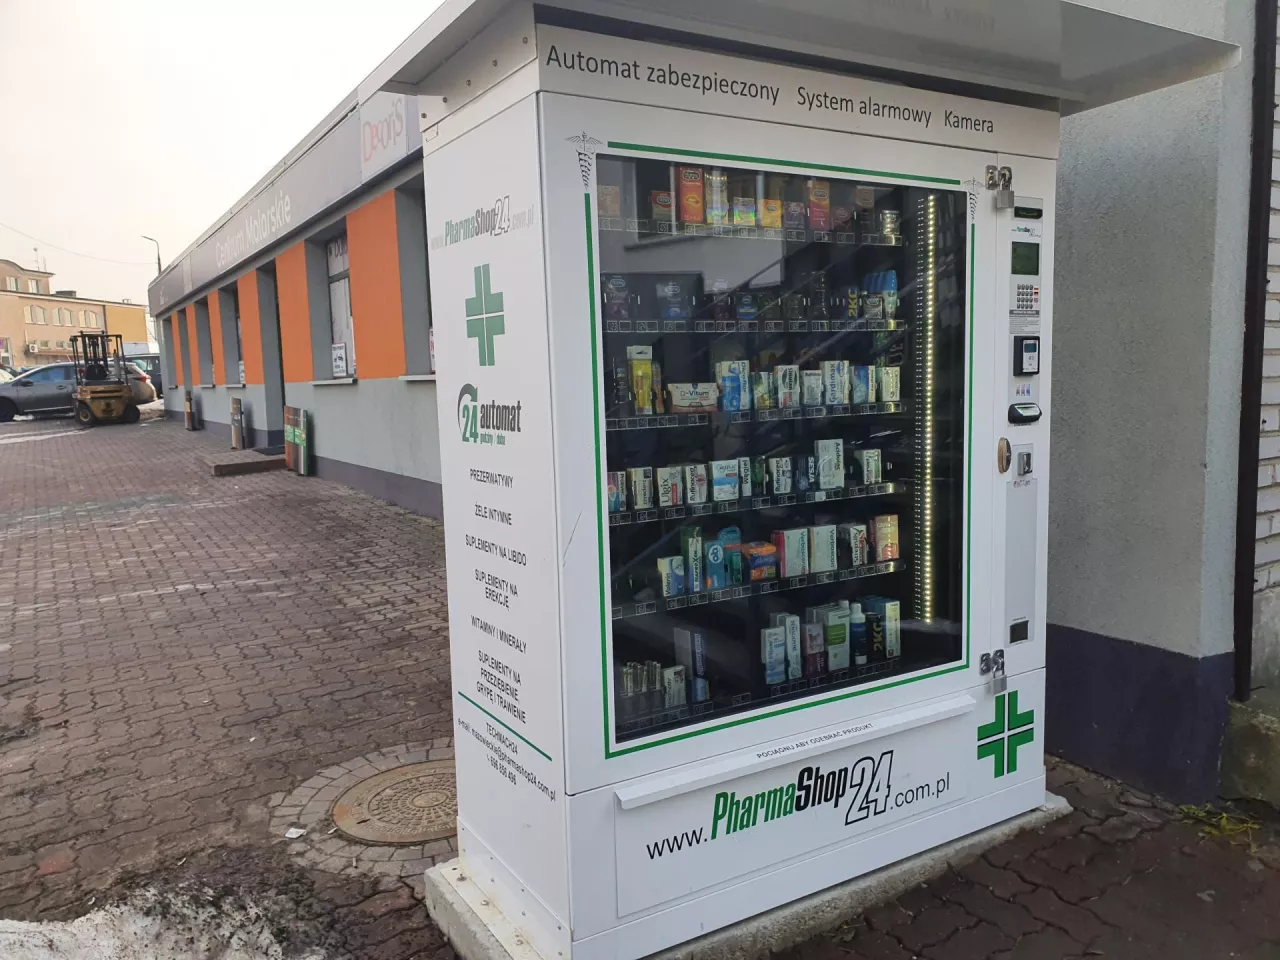 Automat PharmaShop24 w Siedlcach (fot. wiadomoscihandlowe.pl)